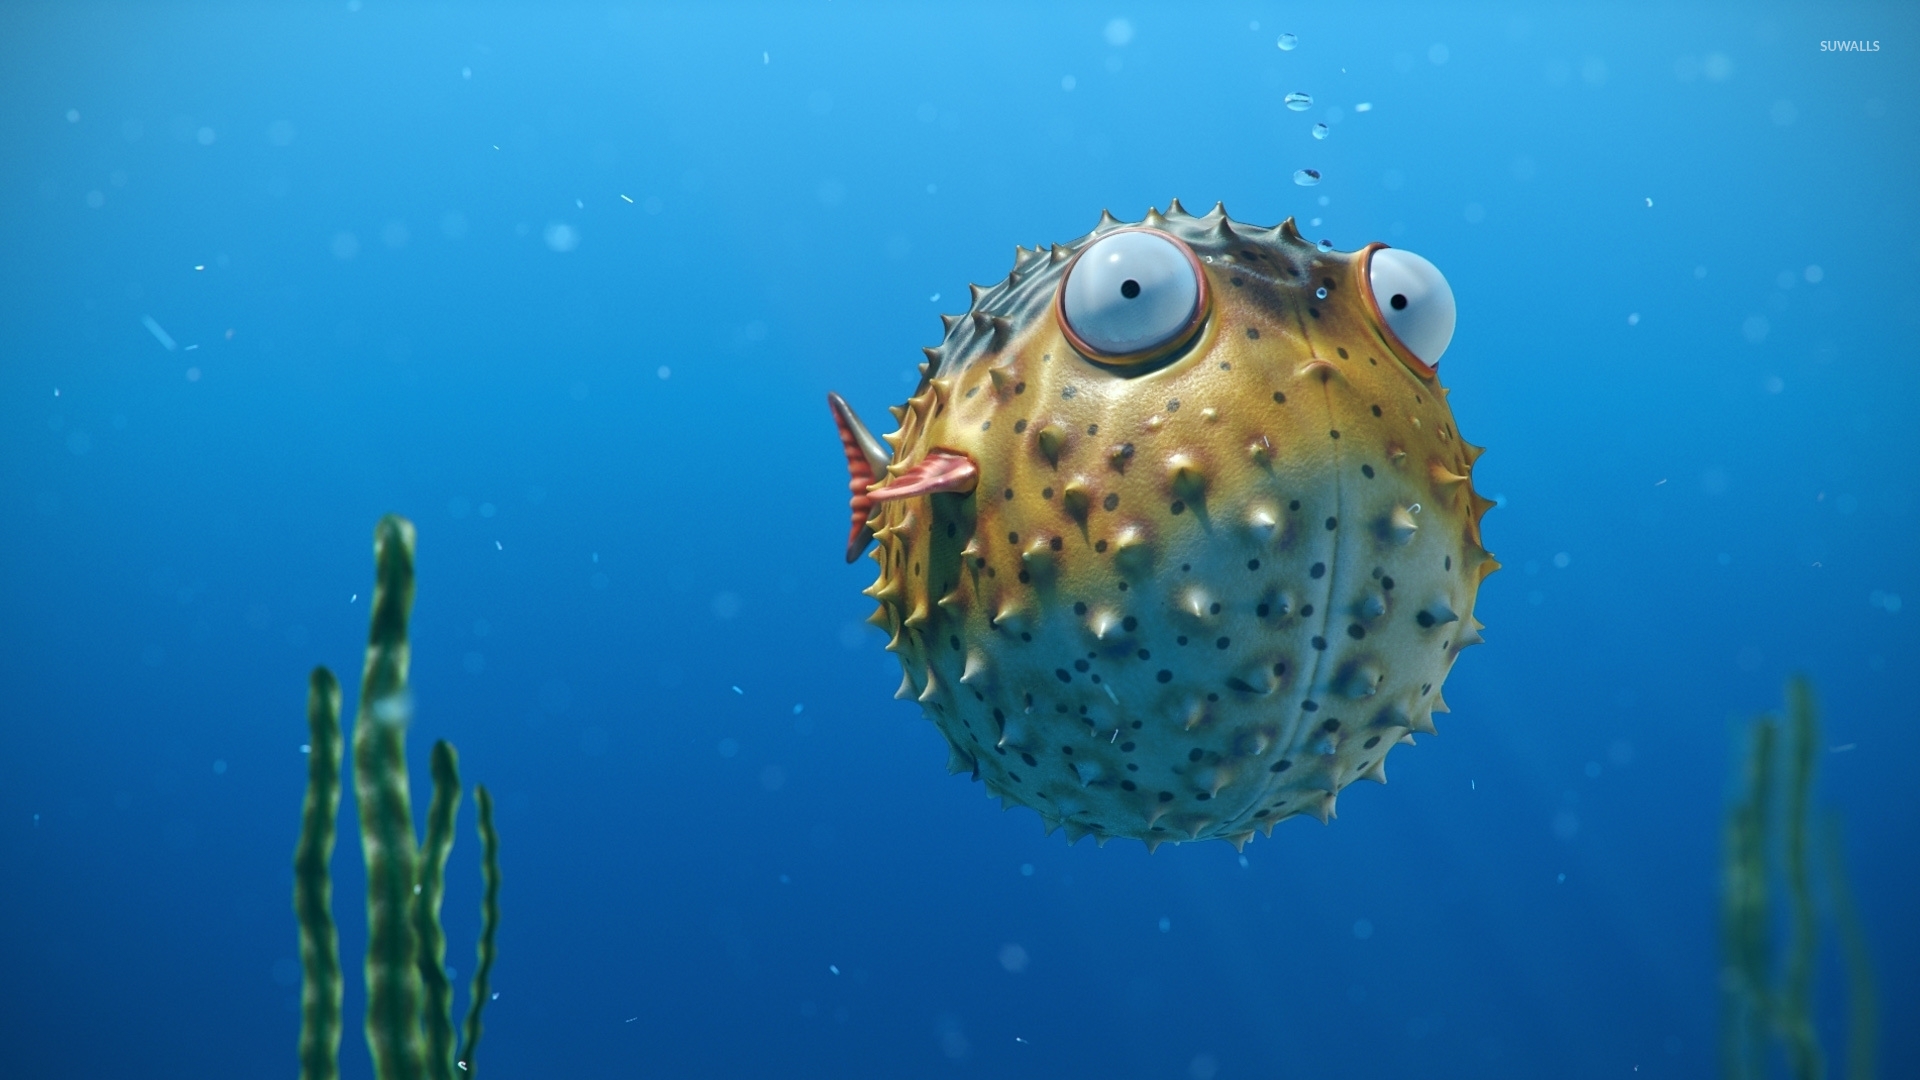 Blowfish in an aquarium wallpaper - Digital Art wallpapers - #52575